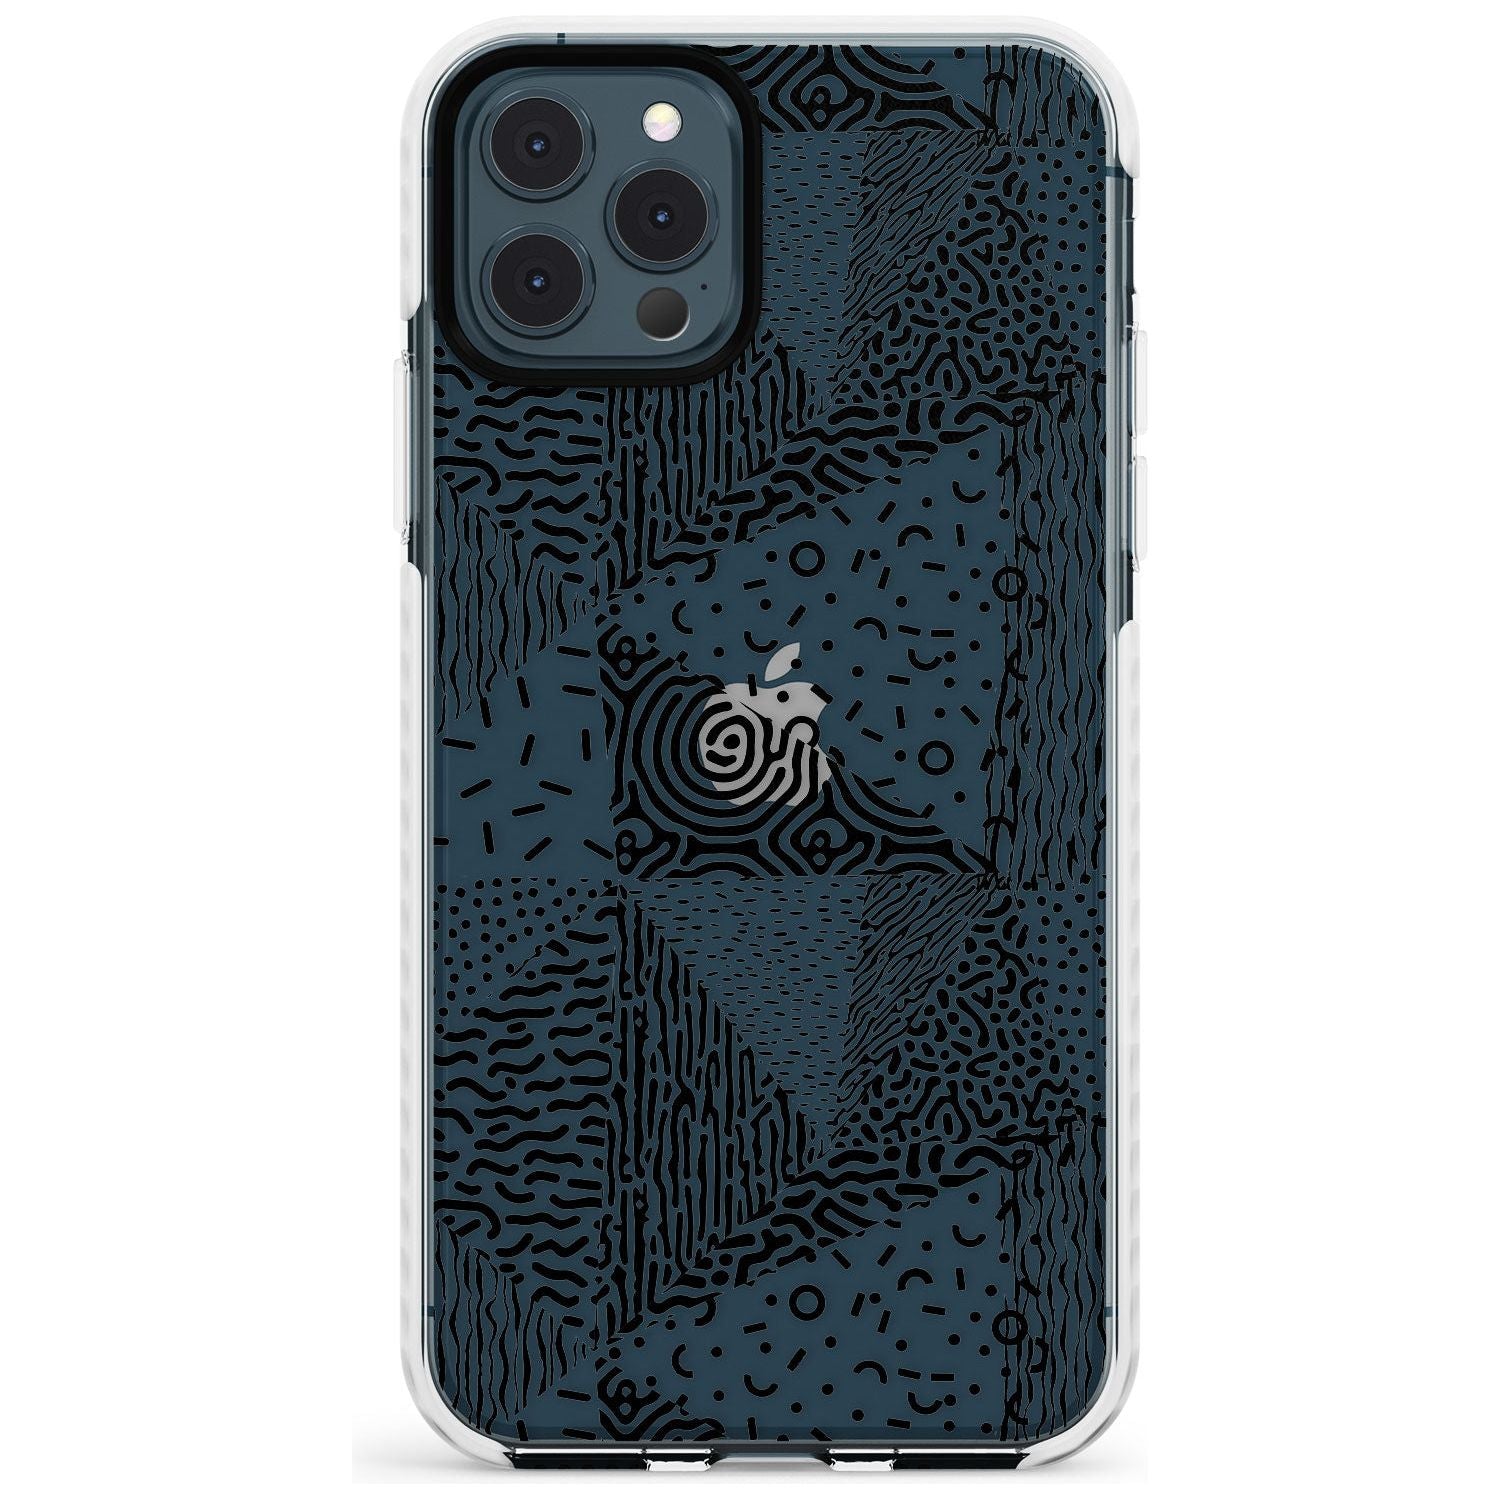 Pattern Mashup (Black) Slim TPU Phone Case for iPhone 11 Pro Max